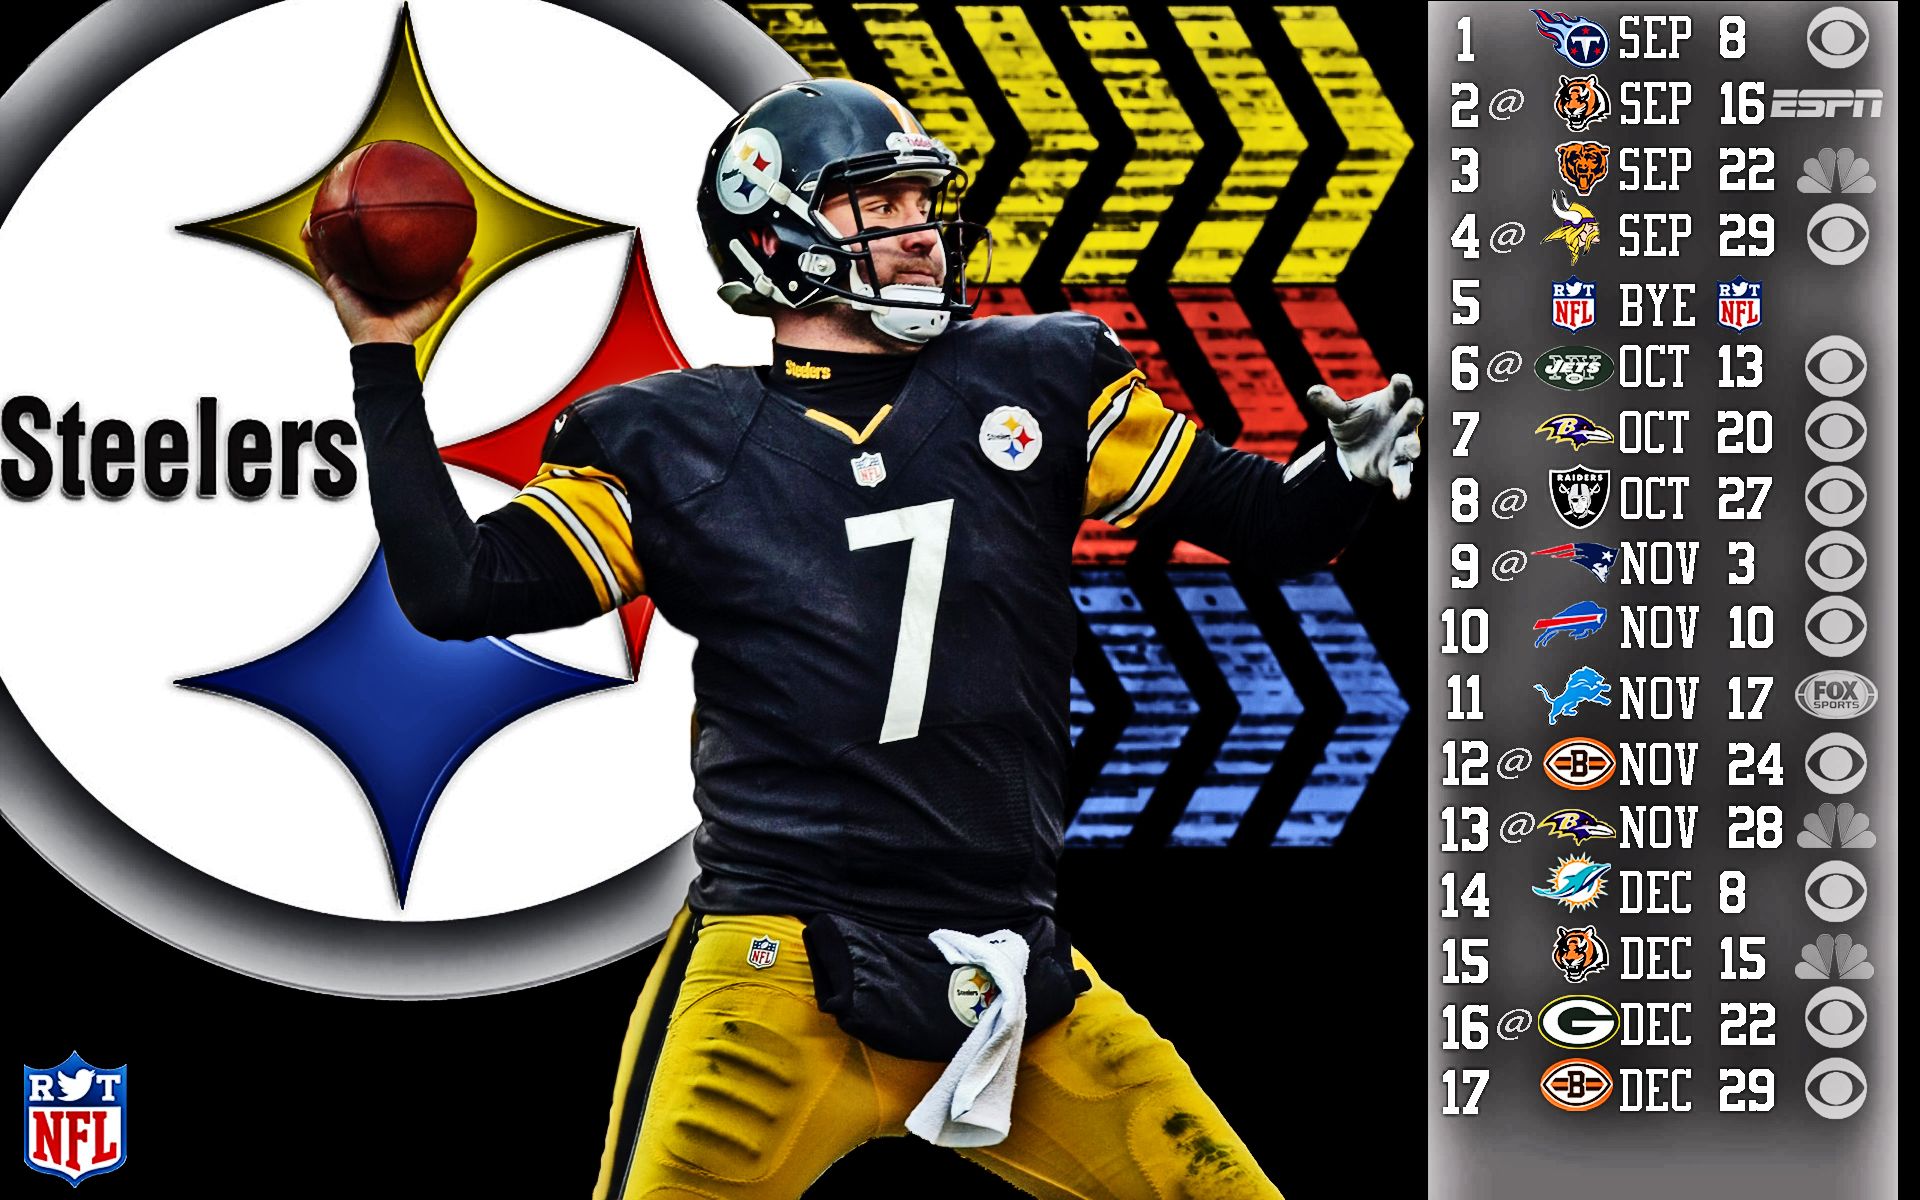 Ben Roethlisberger 2013 Steelers Schedule Wallpaper HDR Sports